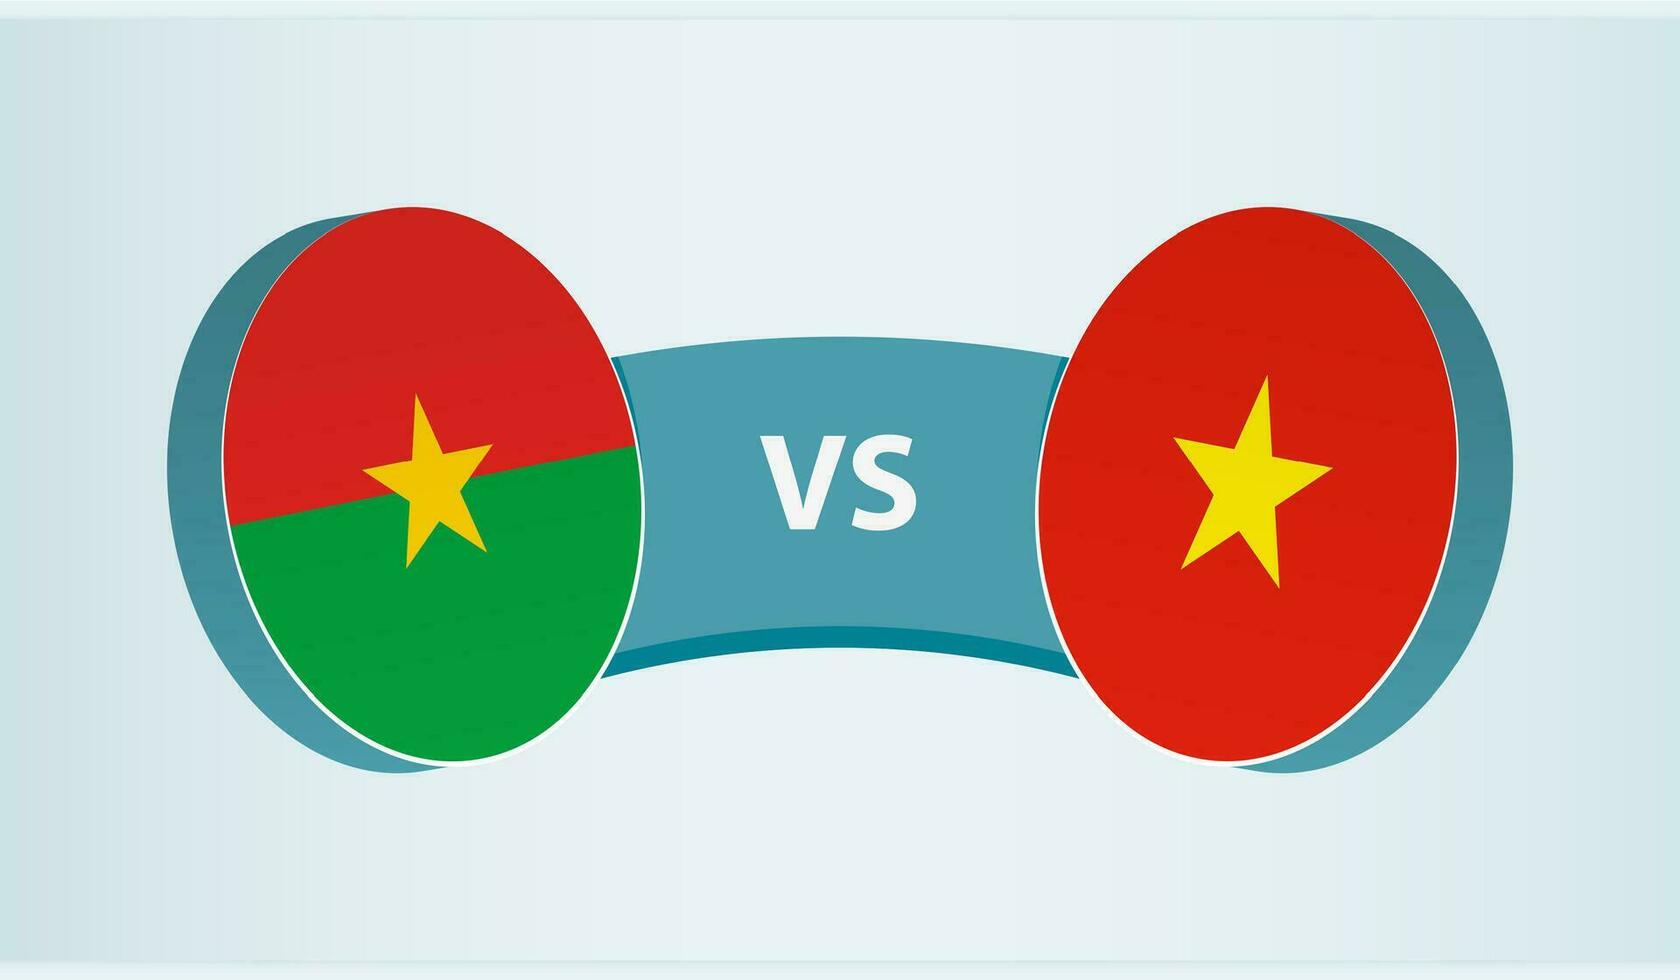 Burkina Faso versus Vietnam, team sports competition concept. vector